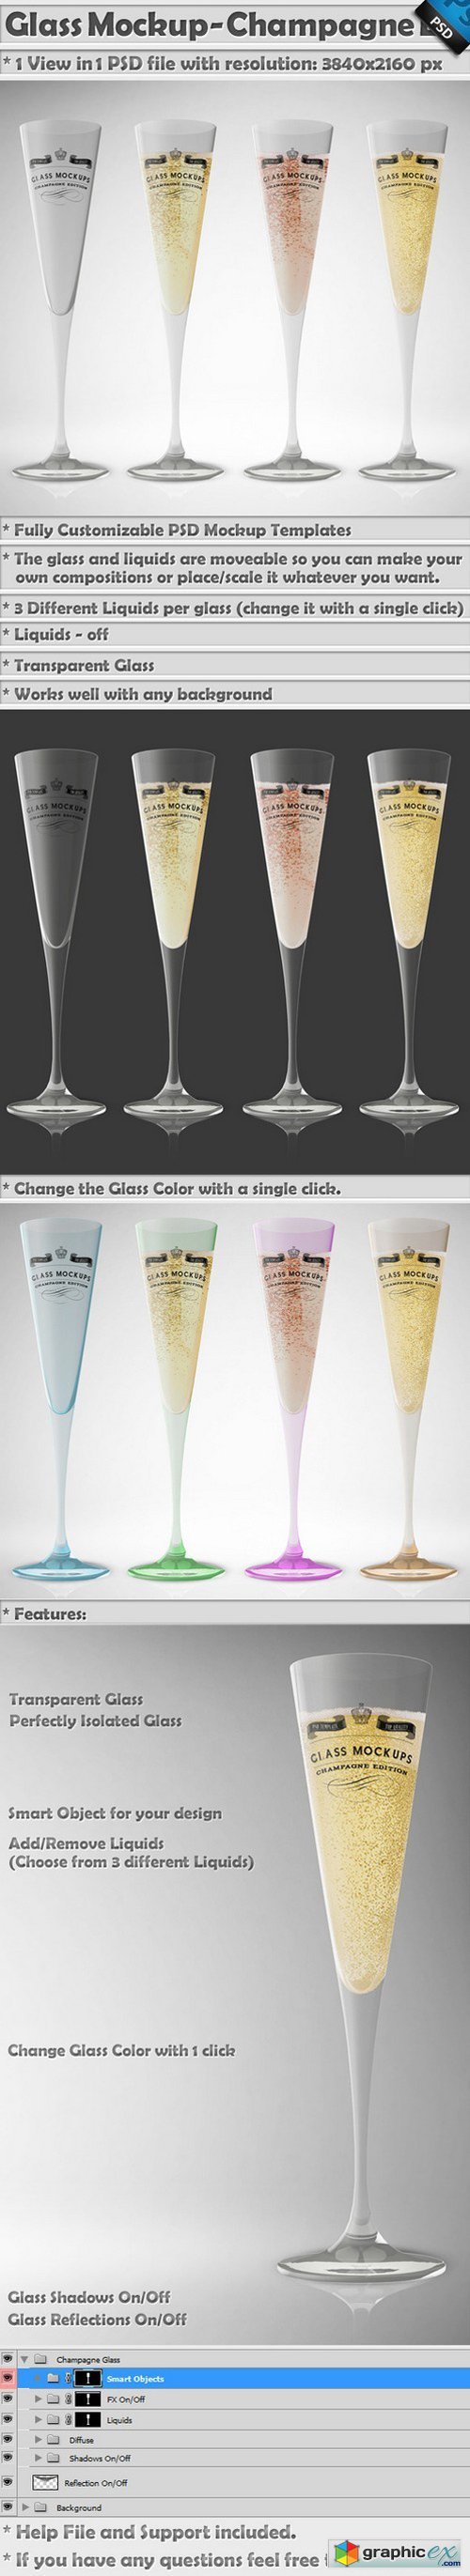 Glass Mockup - Champagne Glass Vol 8 886616